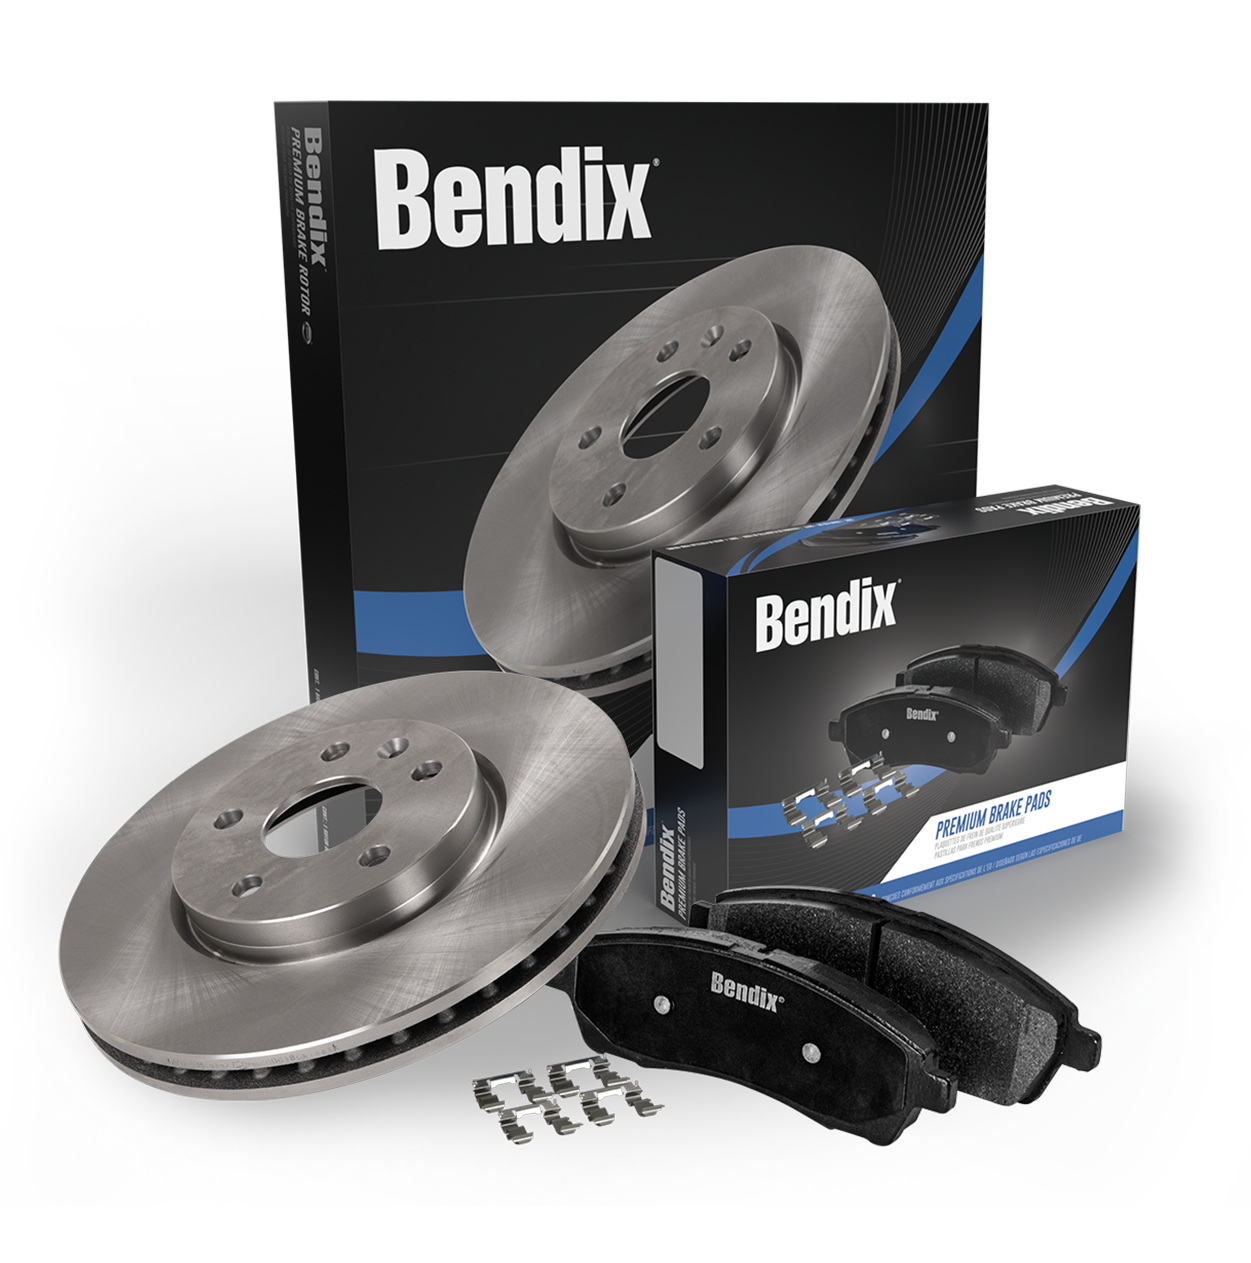 Bendix Premium Copper Free CFM1609A Premium Copper Free Semi-Metallic Brake Pad with Installation Hardware Front 